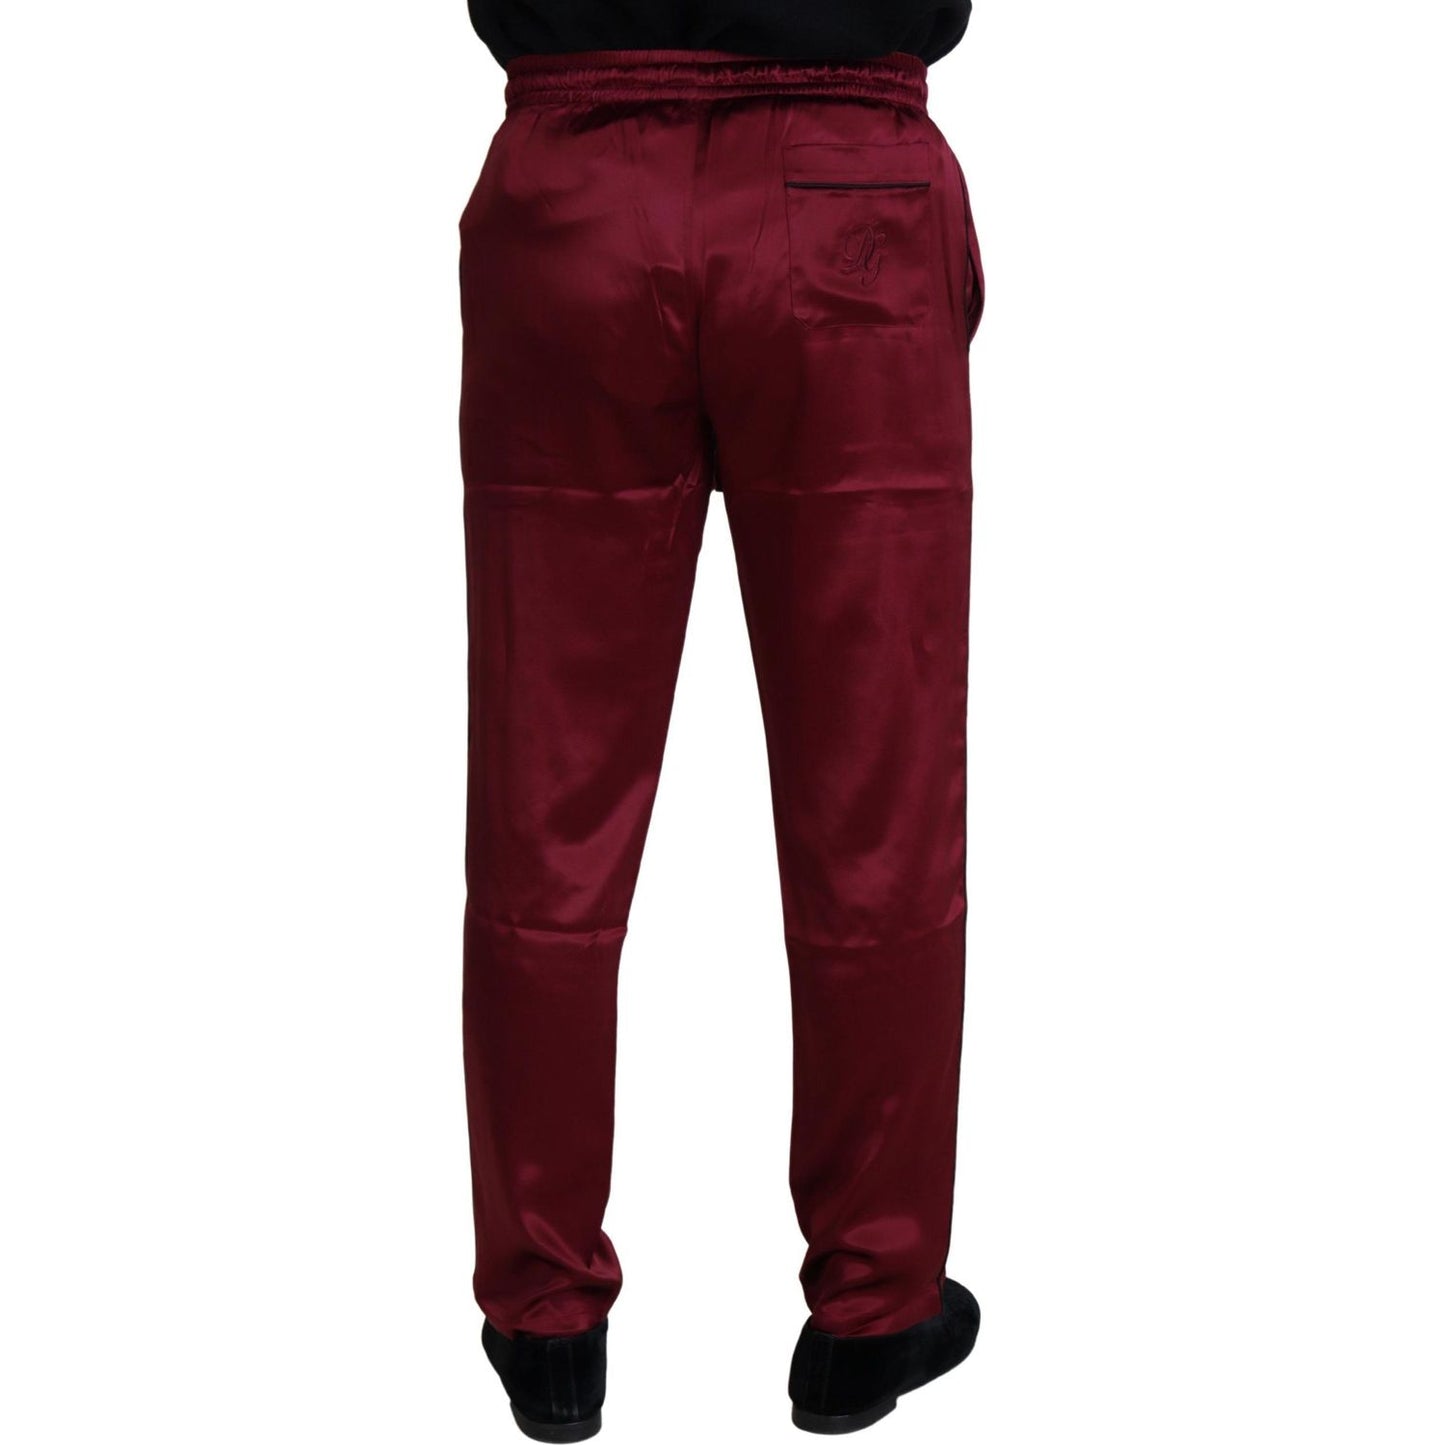 Dolce & Gabbana Silk Lounge Pants in Bordeaux Jeans & Pants bordeaux-silk-dg-sleep-lounge-pants IMG_7181-1-scaled-b3ab2595-098.jpg